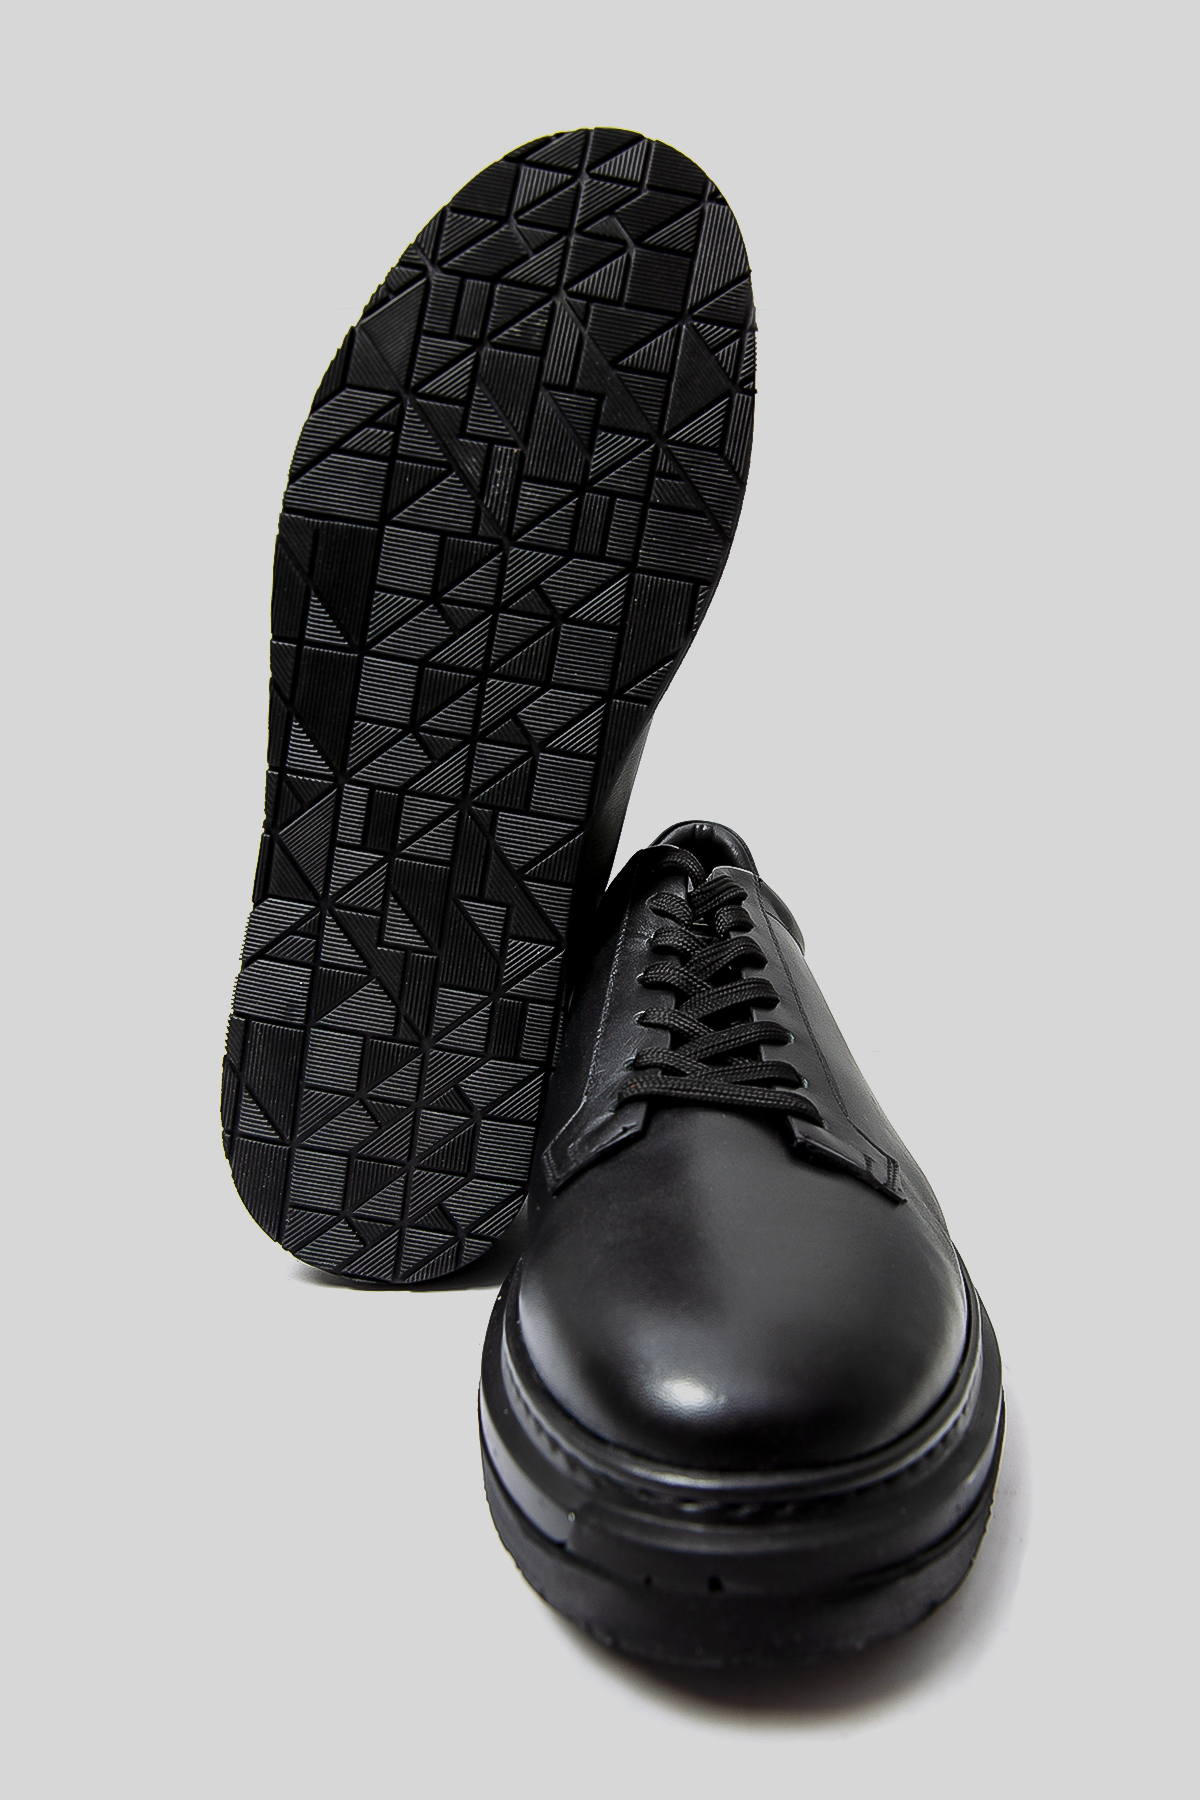 Flat Erkek Deri Sneaker Ayakkabı Siyah